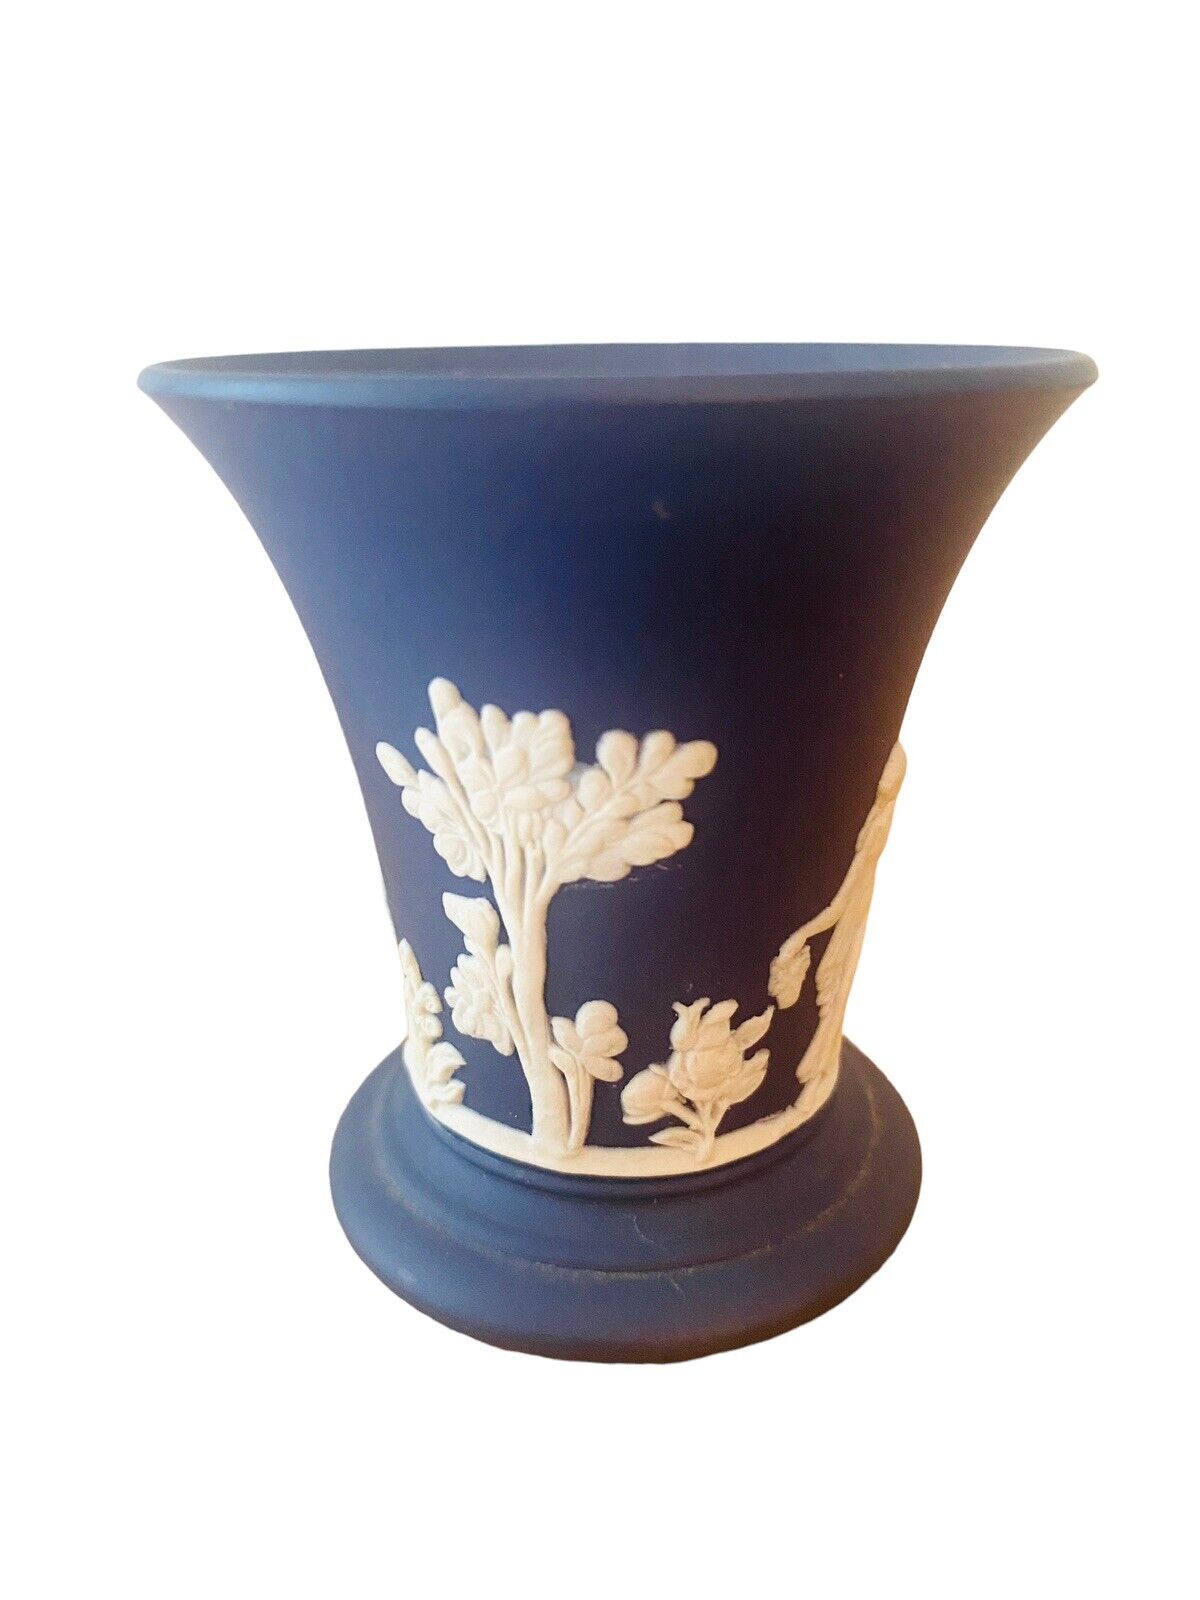 Wedgwood Jasperware Dark Blue Small Vase Rare 2.5 Inch High England